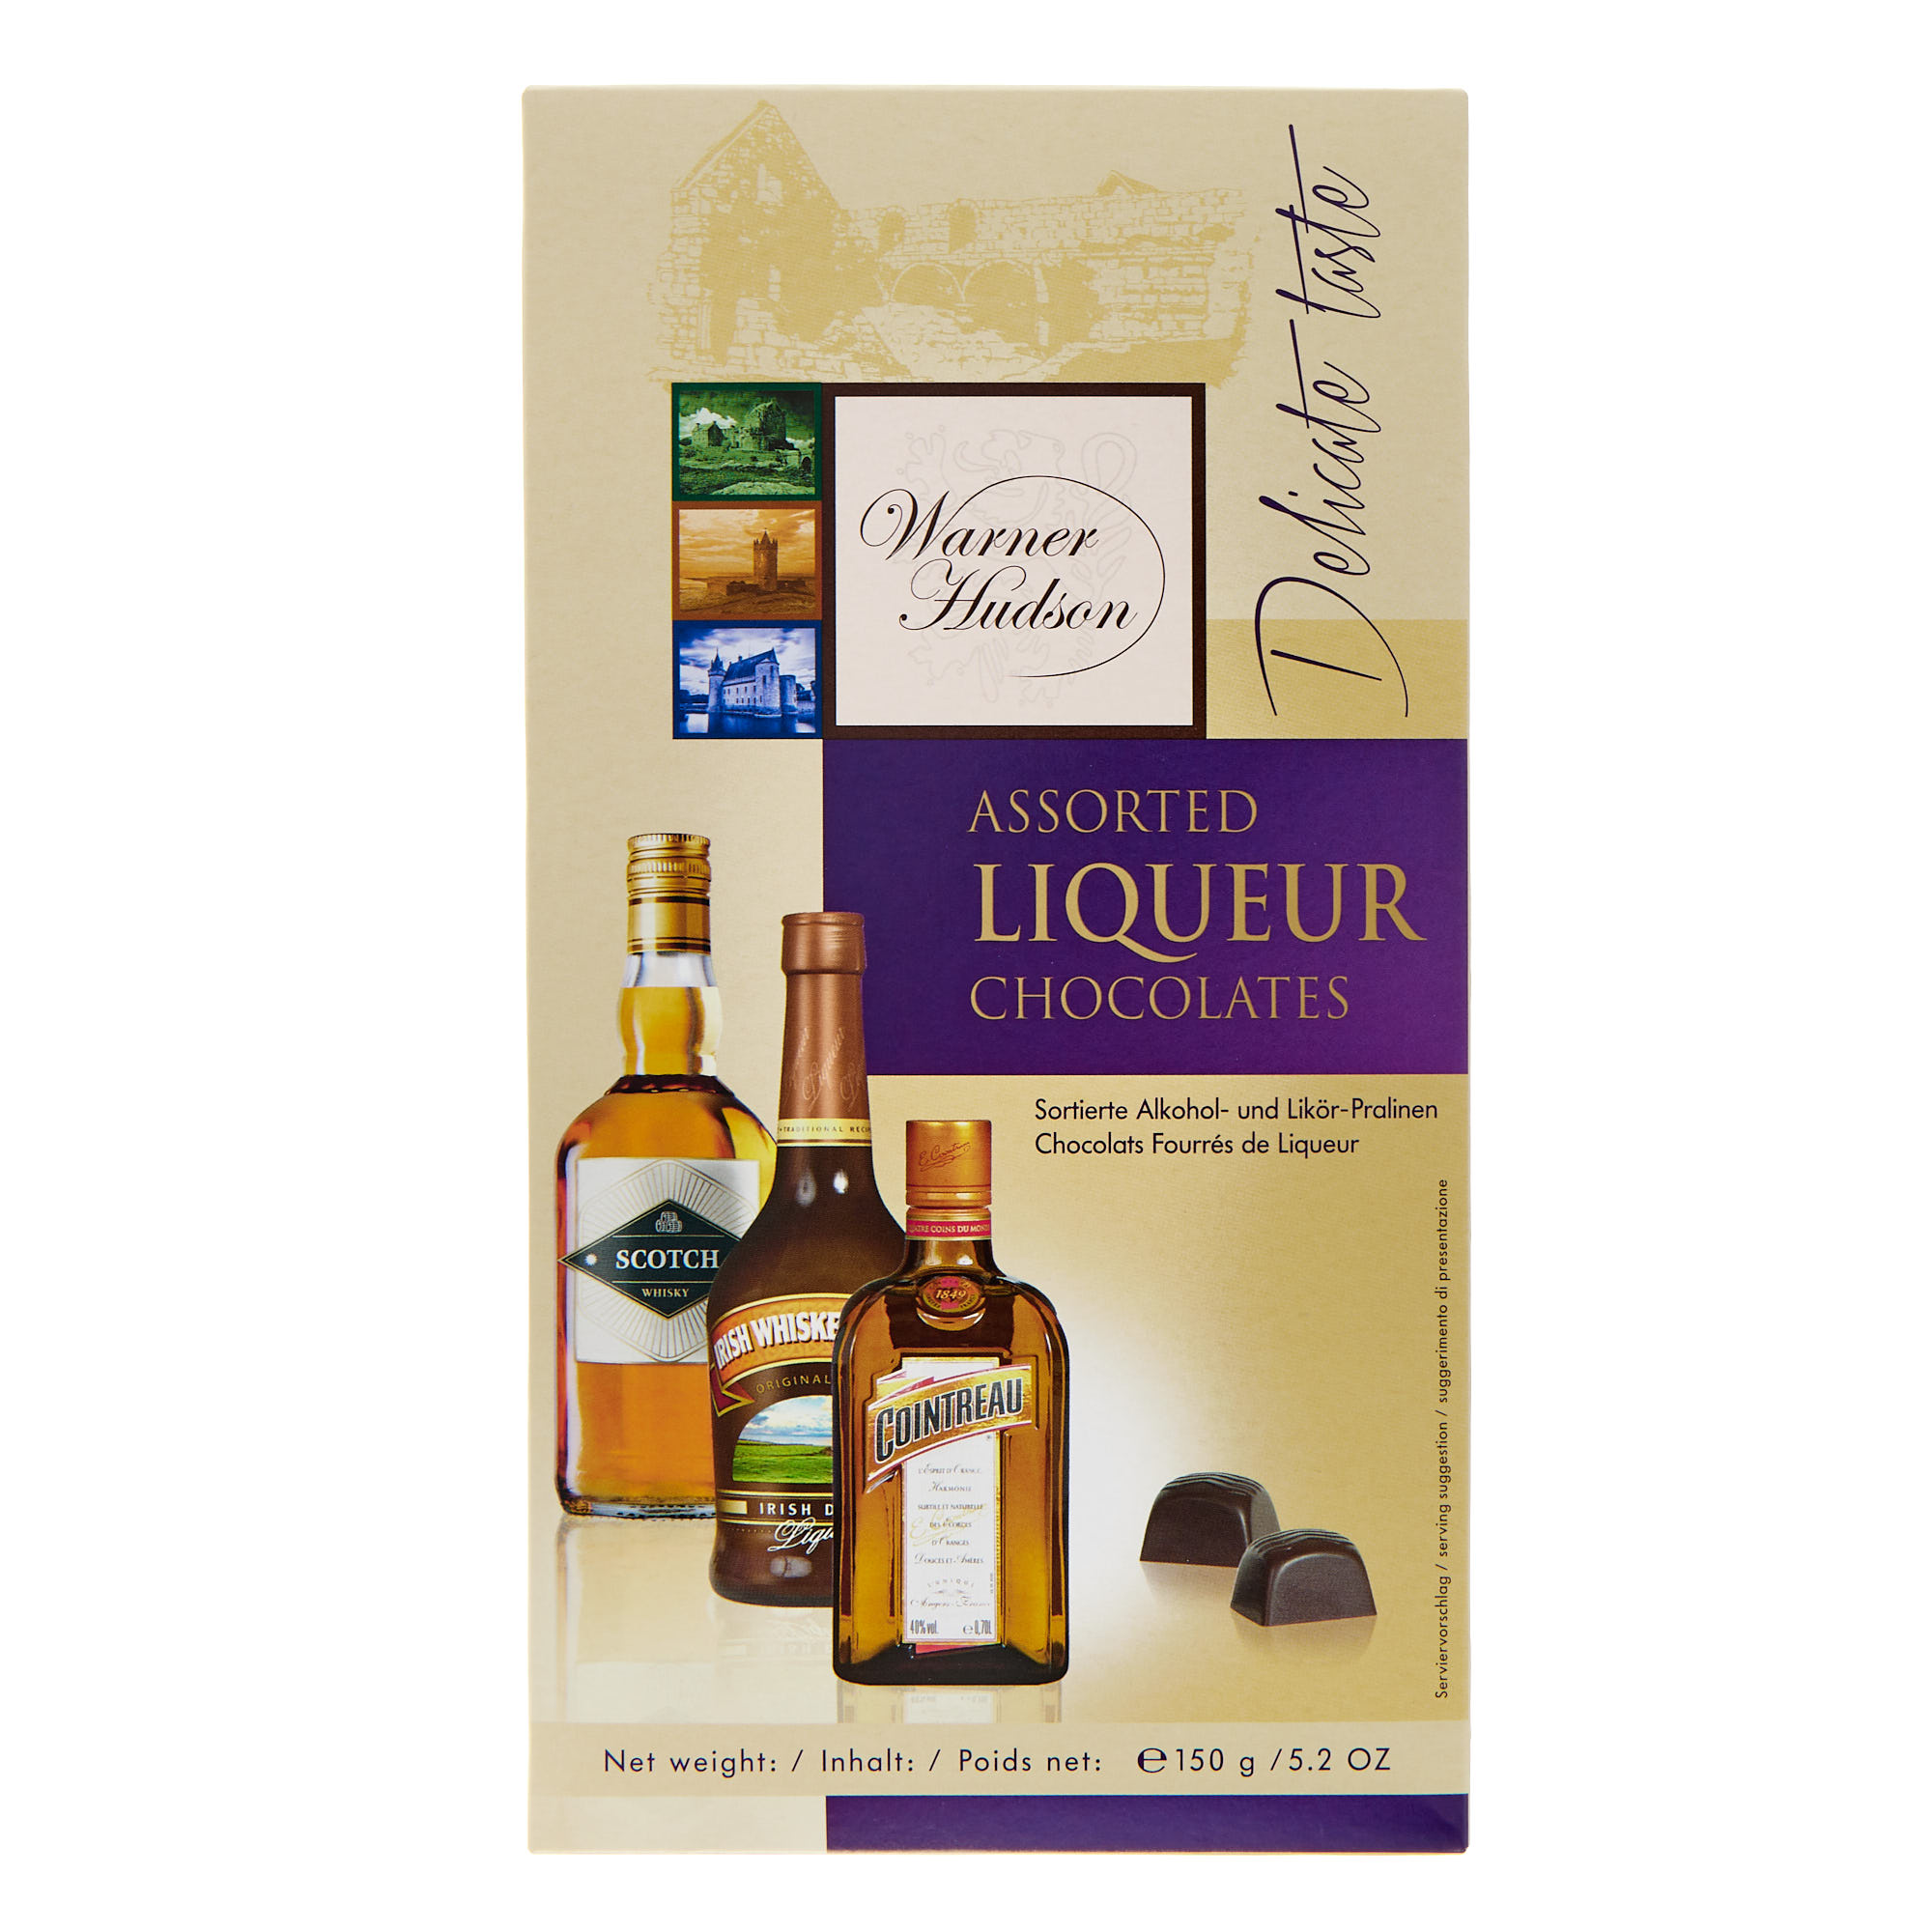 Warner Hudson Assorted Chocolate Liqueurs 150g